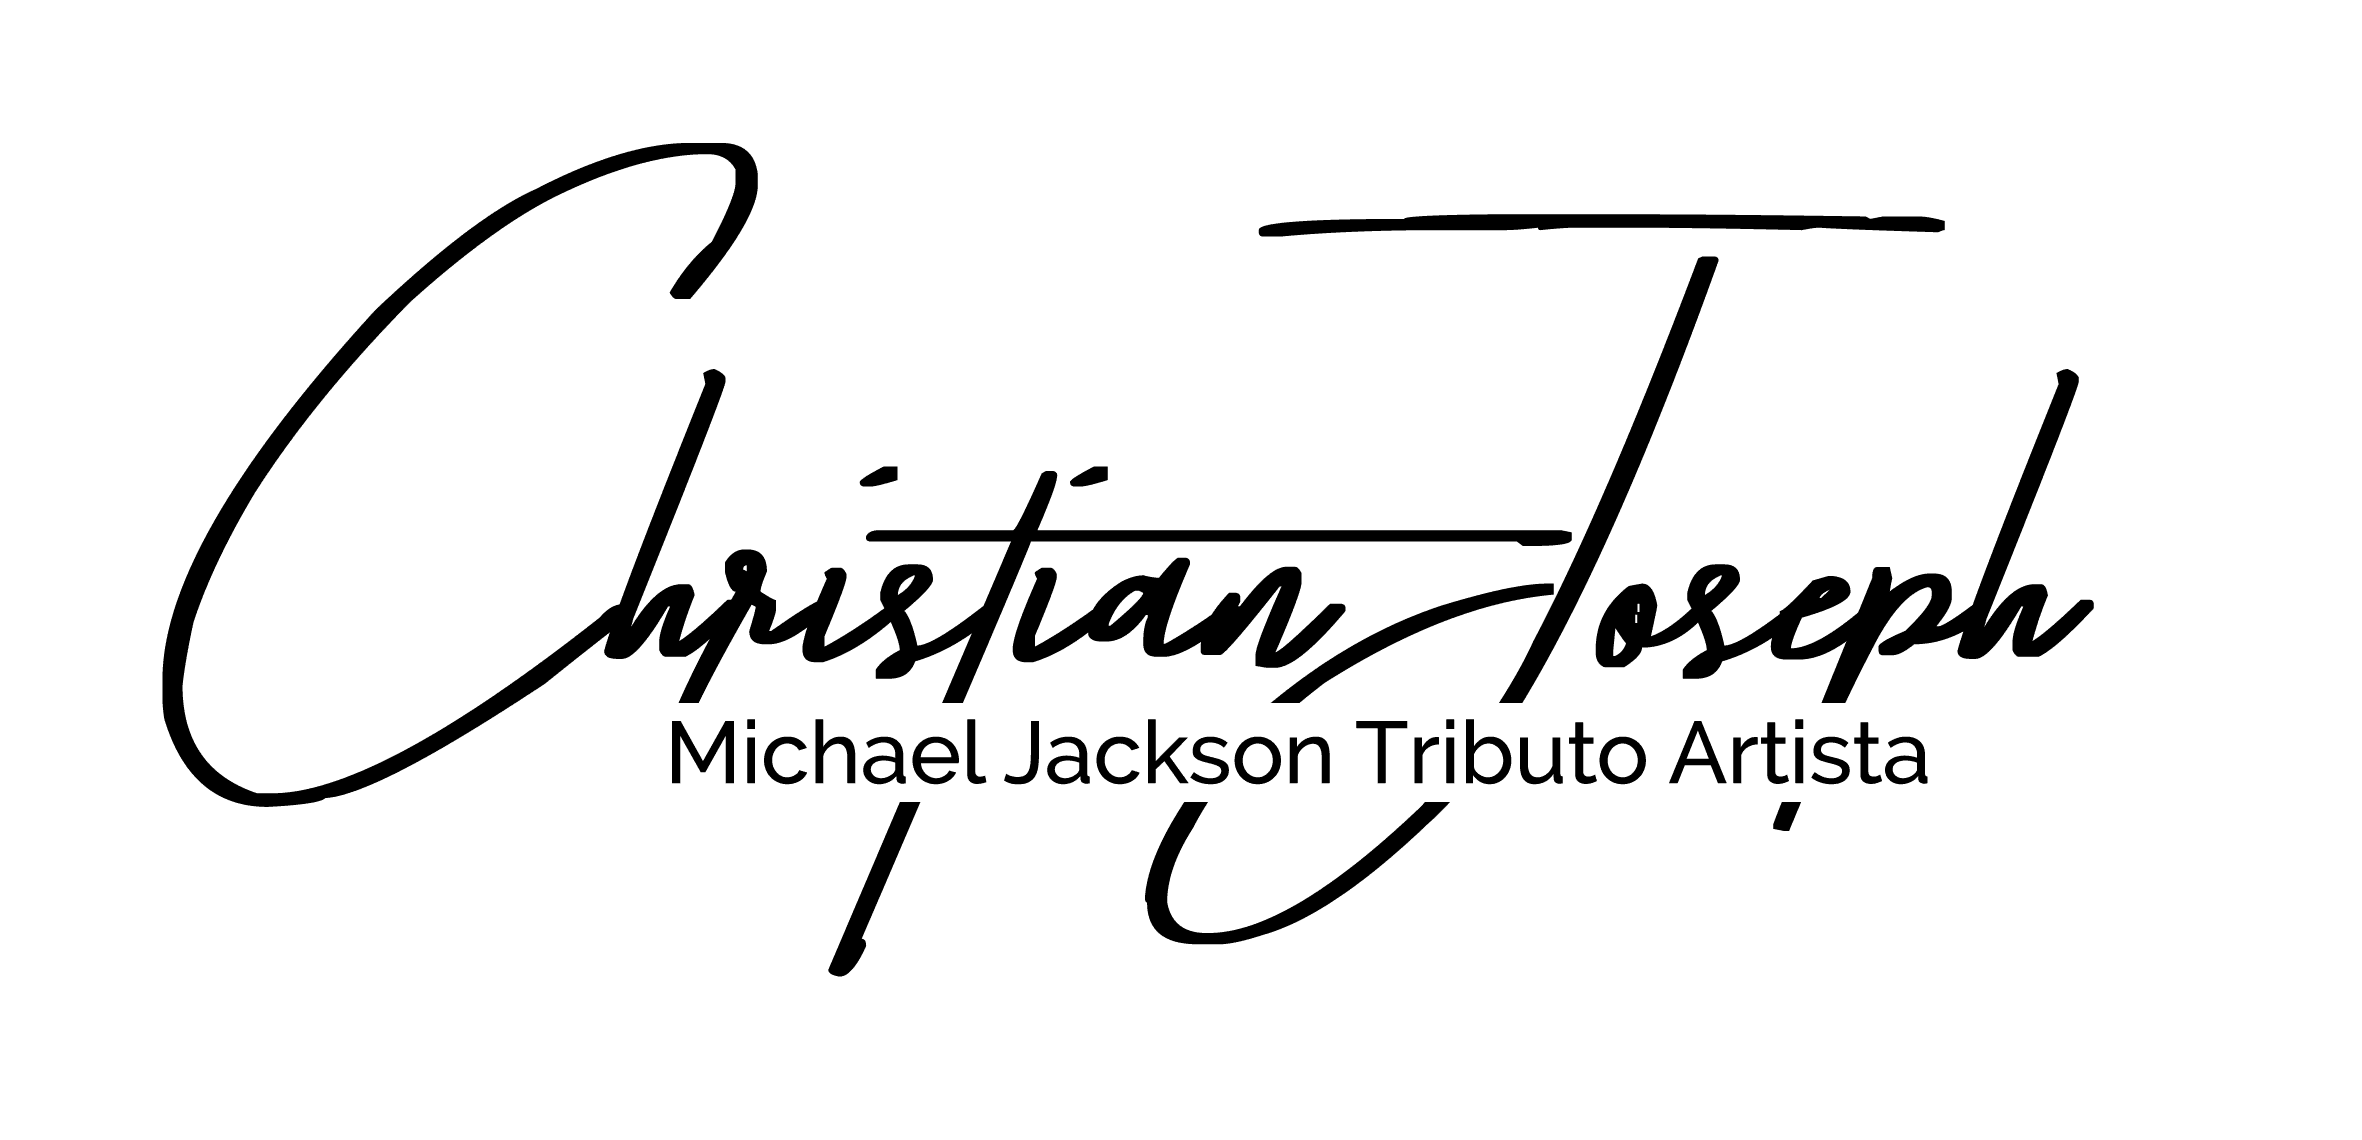 Christian Joseph - Michael Jackson Tributo Artista